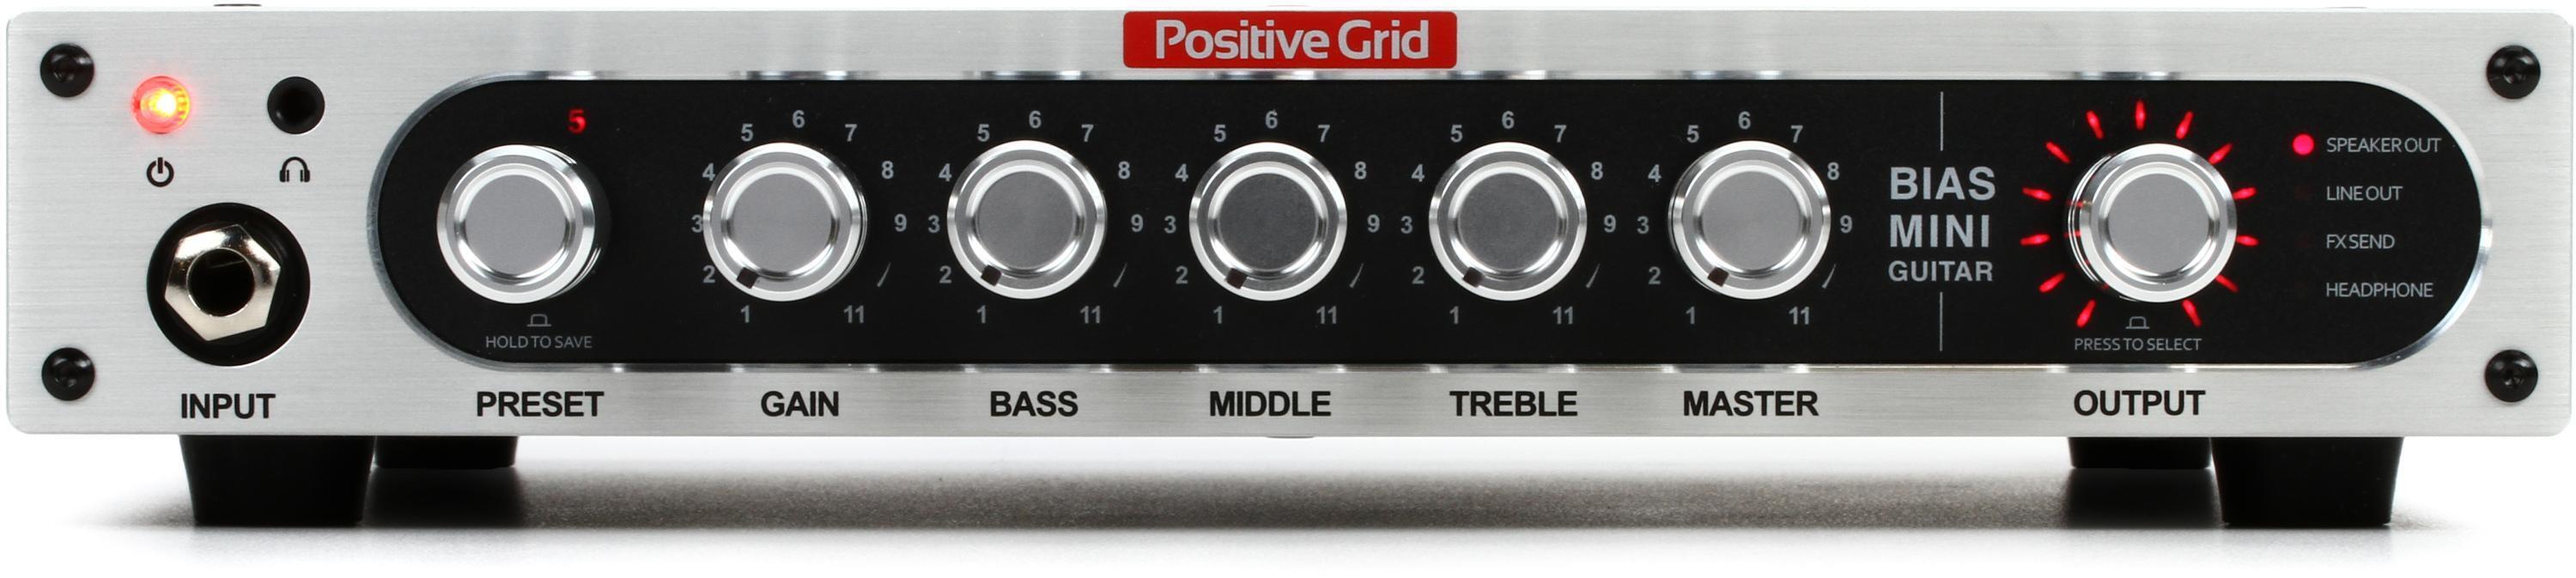 Positive Grid Bias Mini 300-watt Guitar Head | Sweetwater